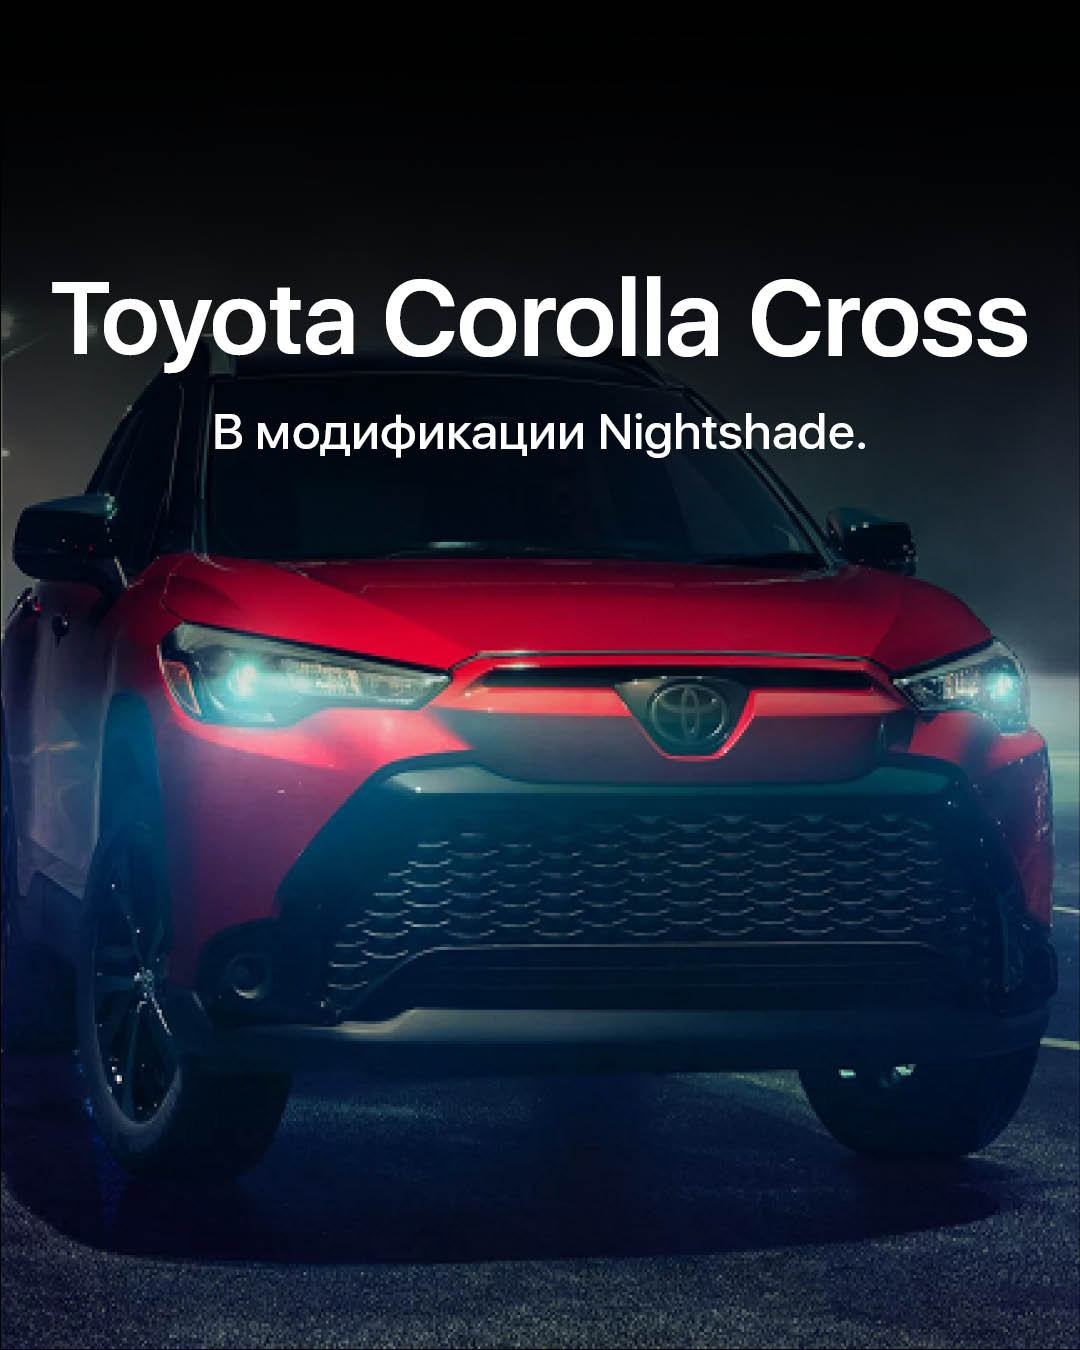 Представлена новая версия Nightshade кроссовера Toyota Corolla Cross Hybrid 2024 года.